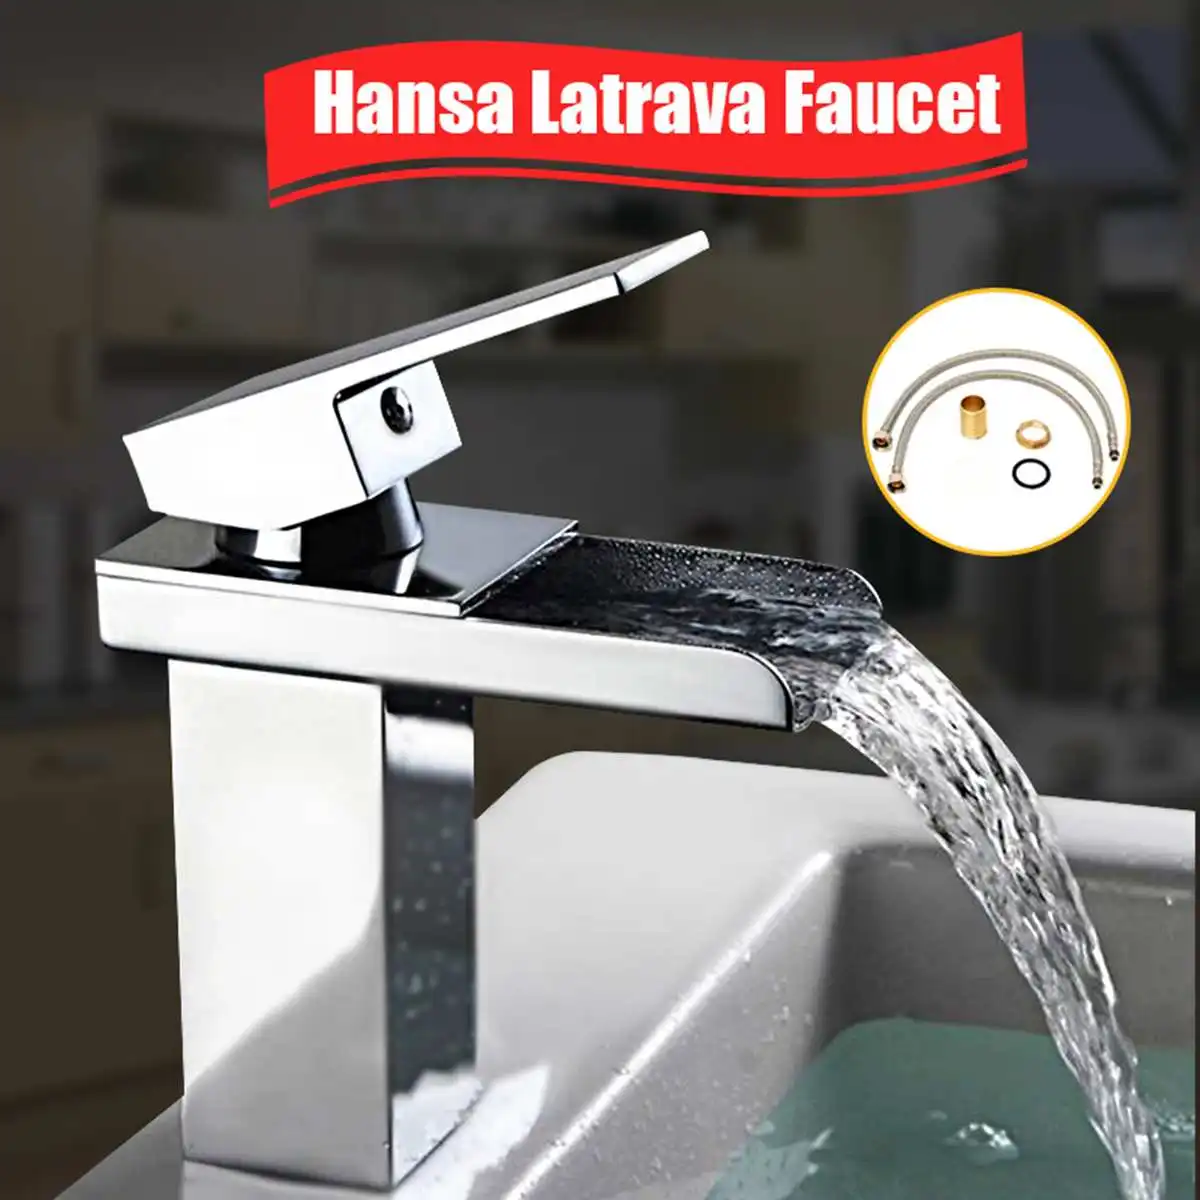 Chrome Sink Waterfall Taps Shower Mixer Basin Brass Faucet For Kitchen Bathroom